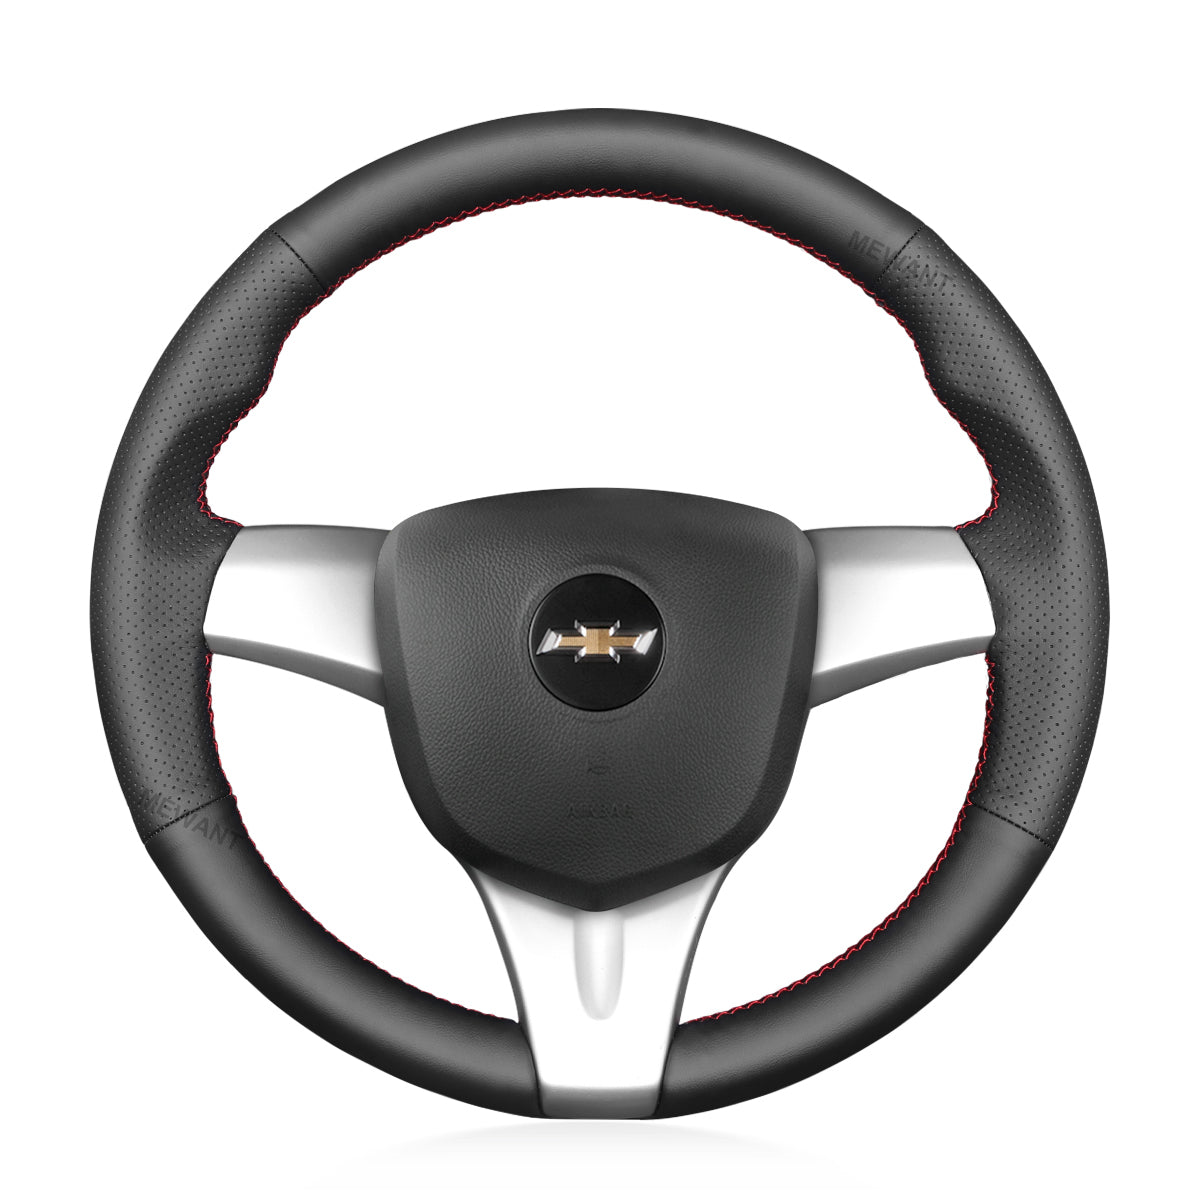 MEWANT Black PU Leather Real Genuine Leather Car Steering Wheel Cover for Chevrolet Spark / Spark EV / for Holden Barina Spark